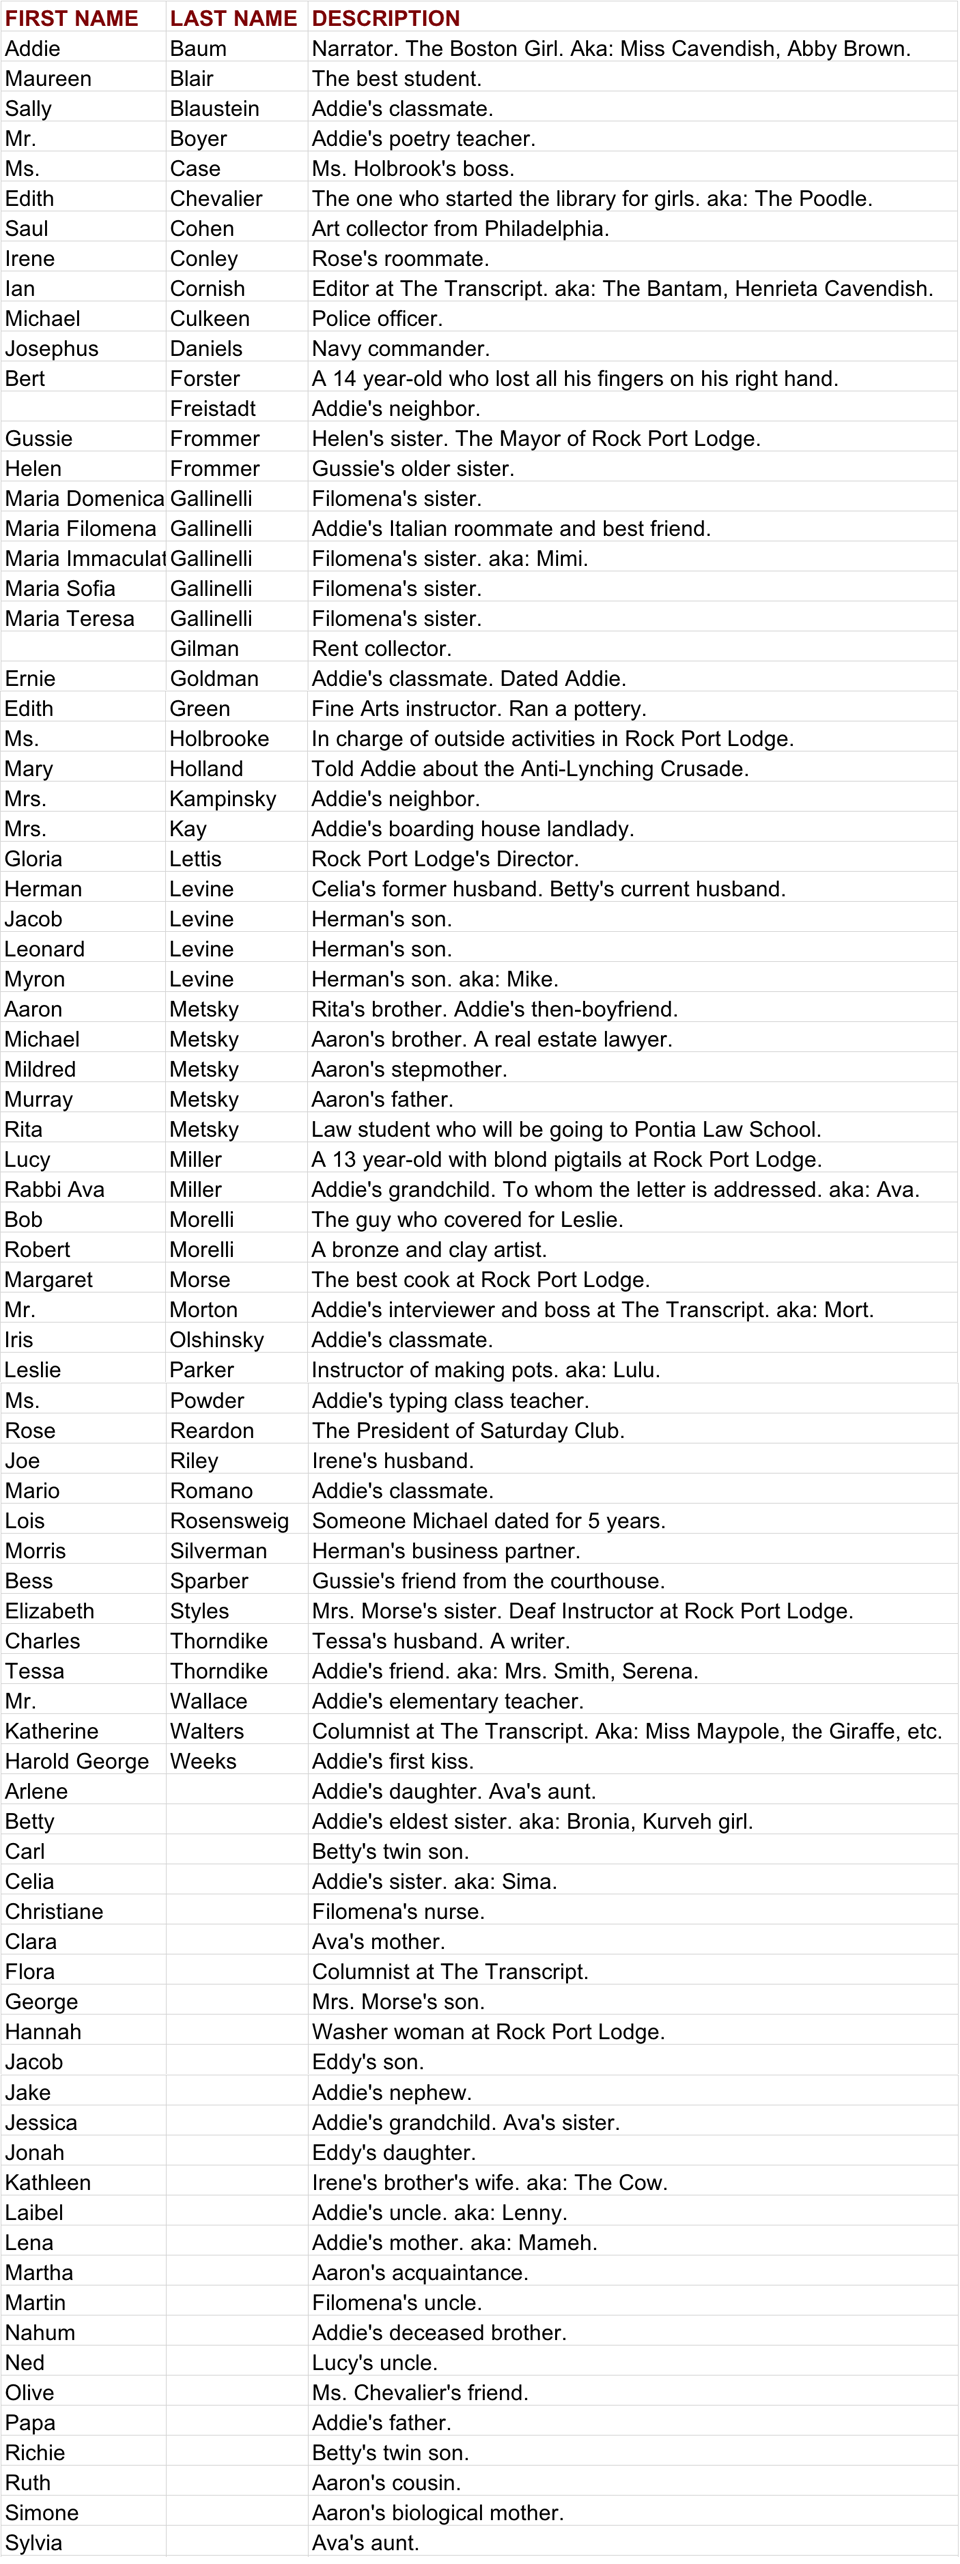 The Boston Girl Alphabetical Character List